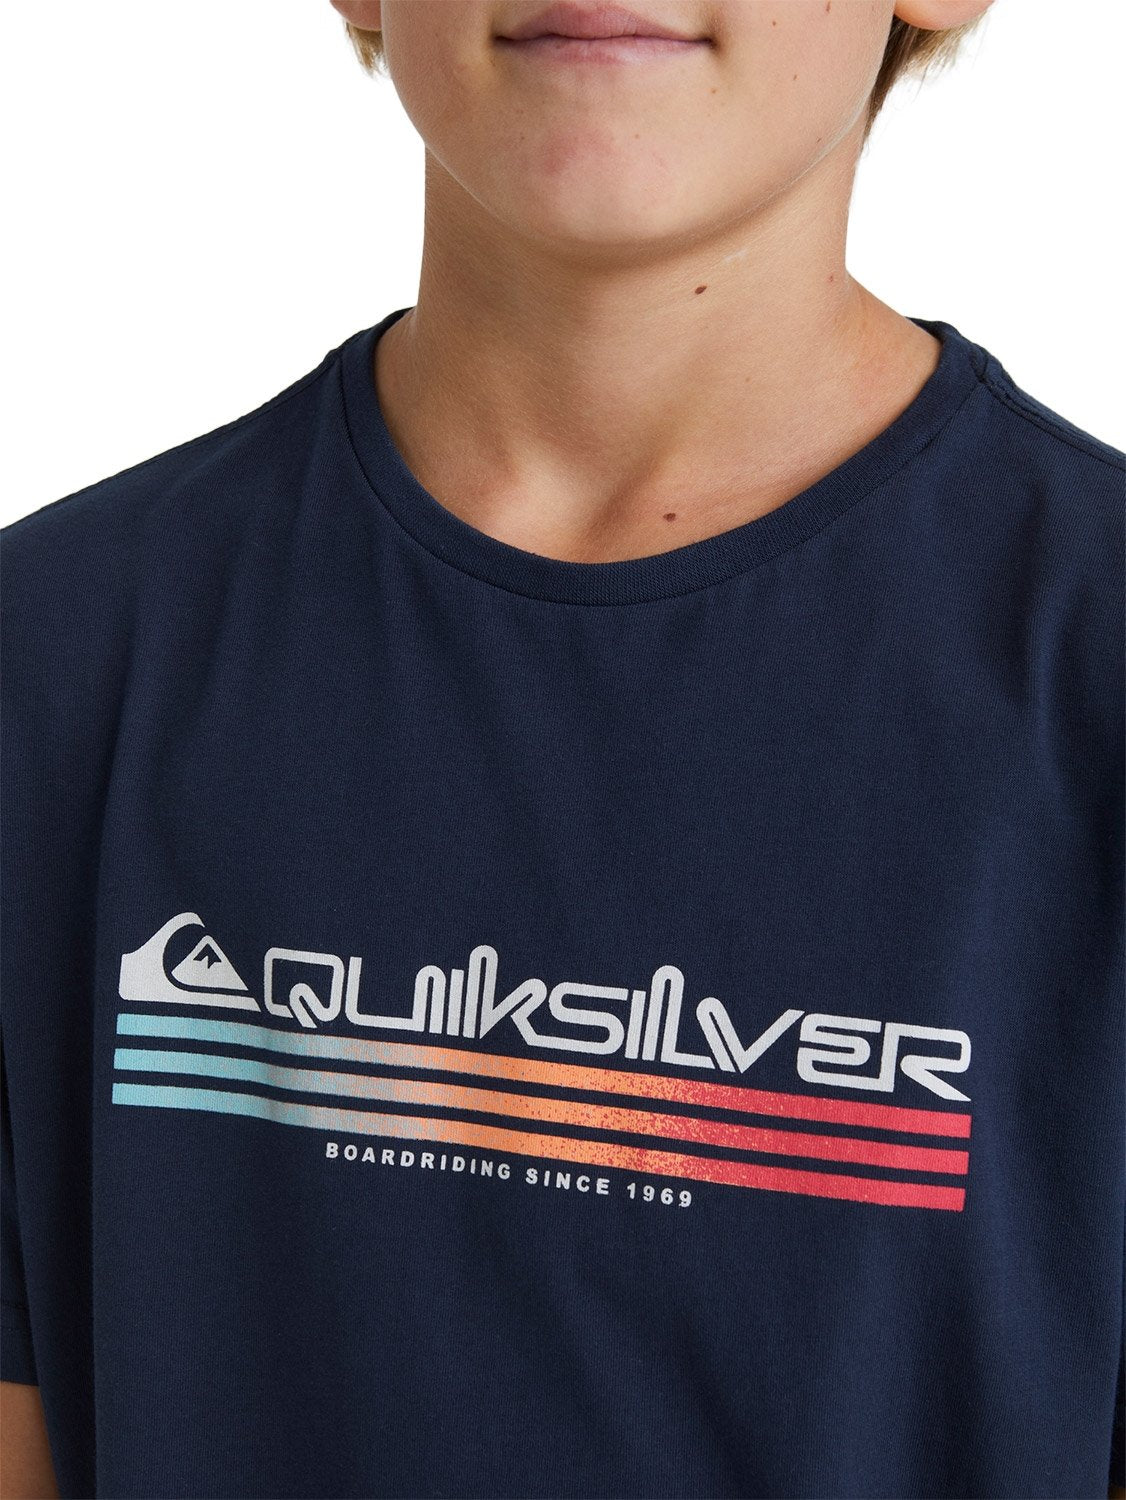 Quiksilver Boys Omni Fill Short Sleeve T-Shirt